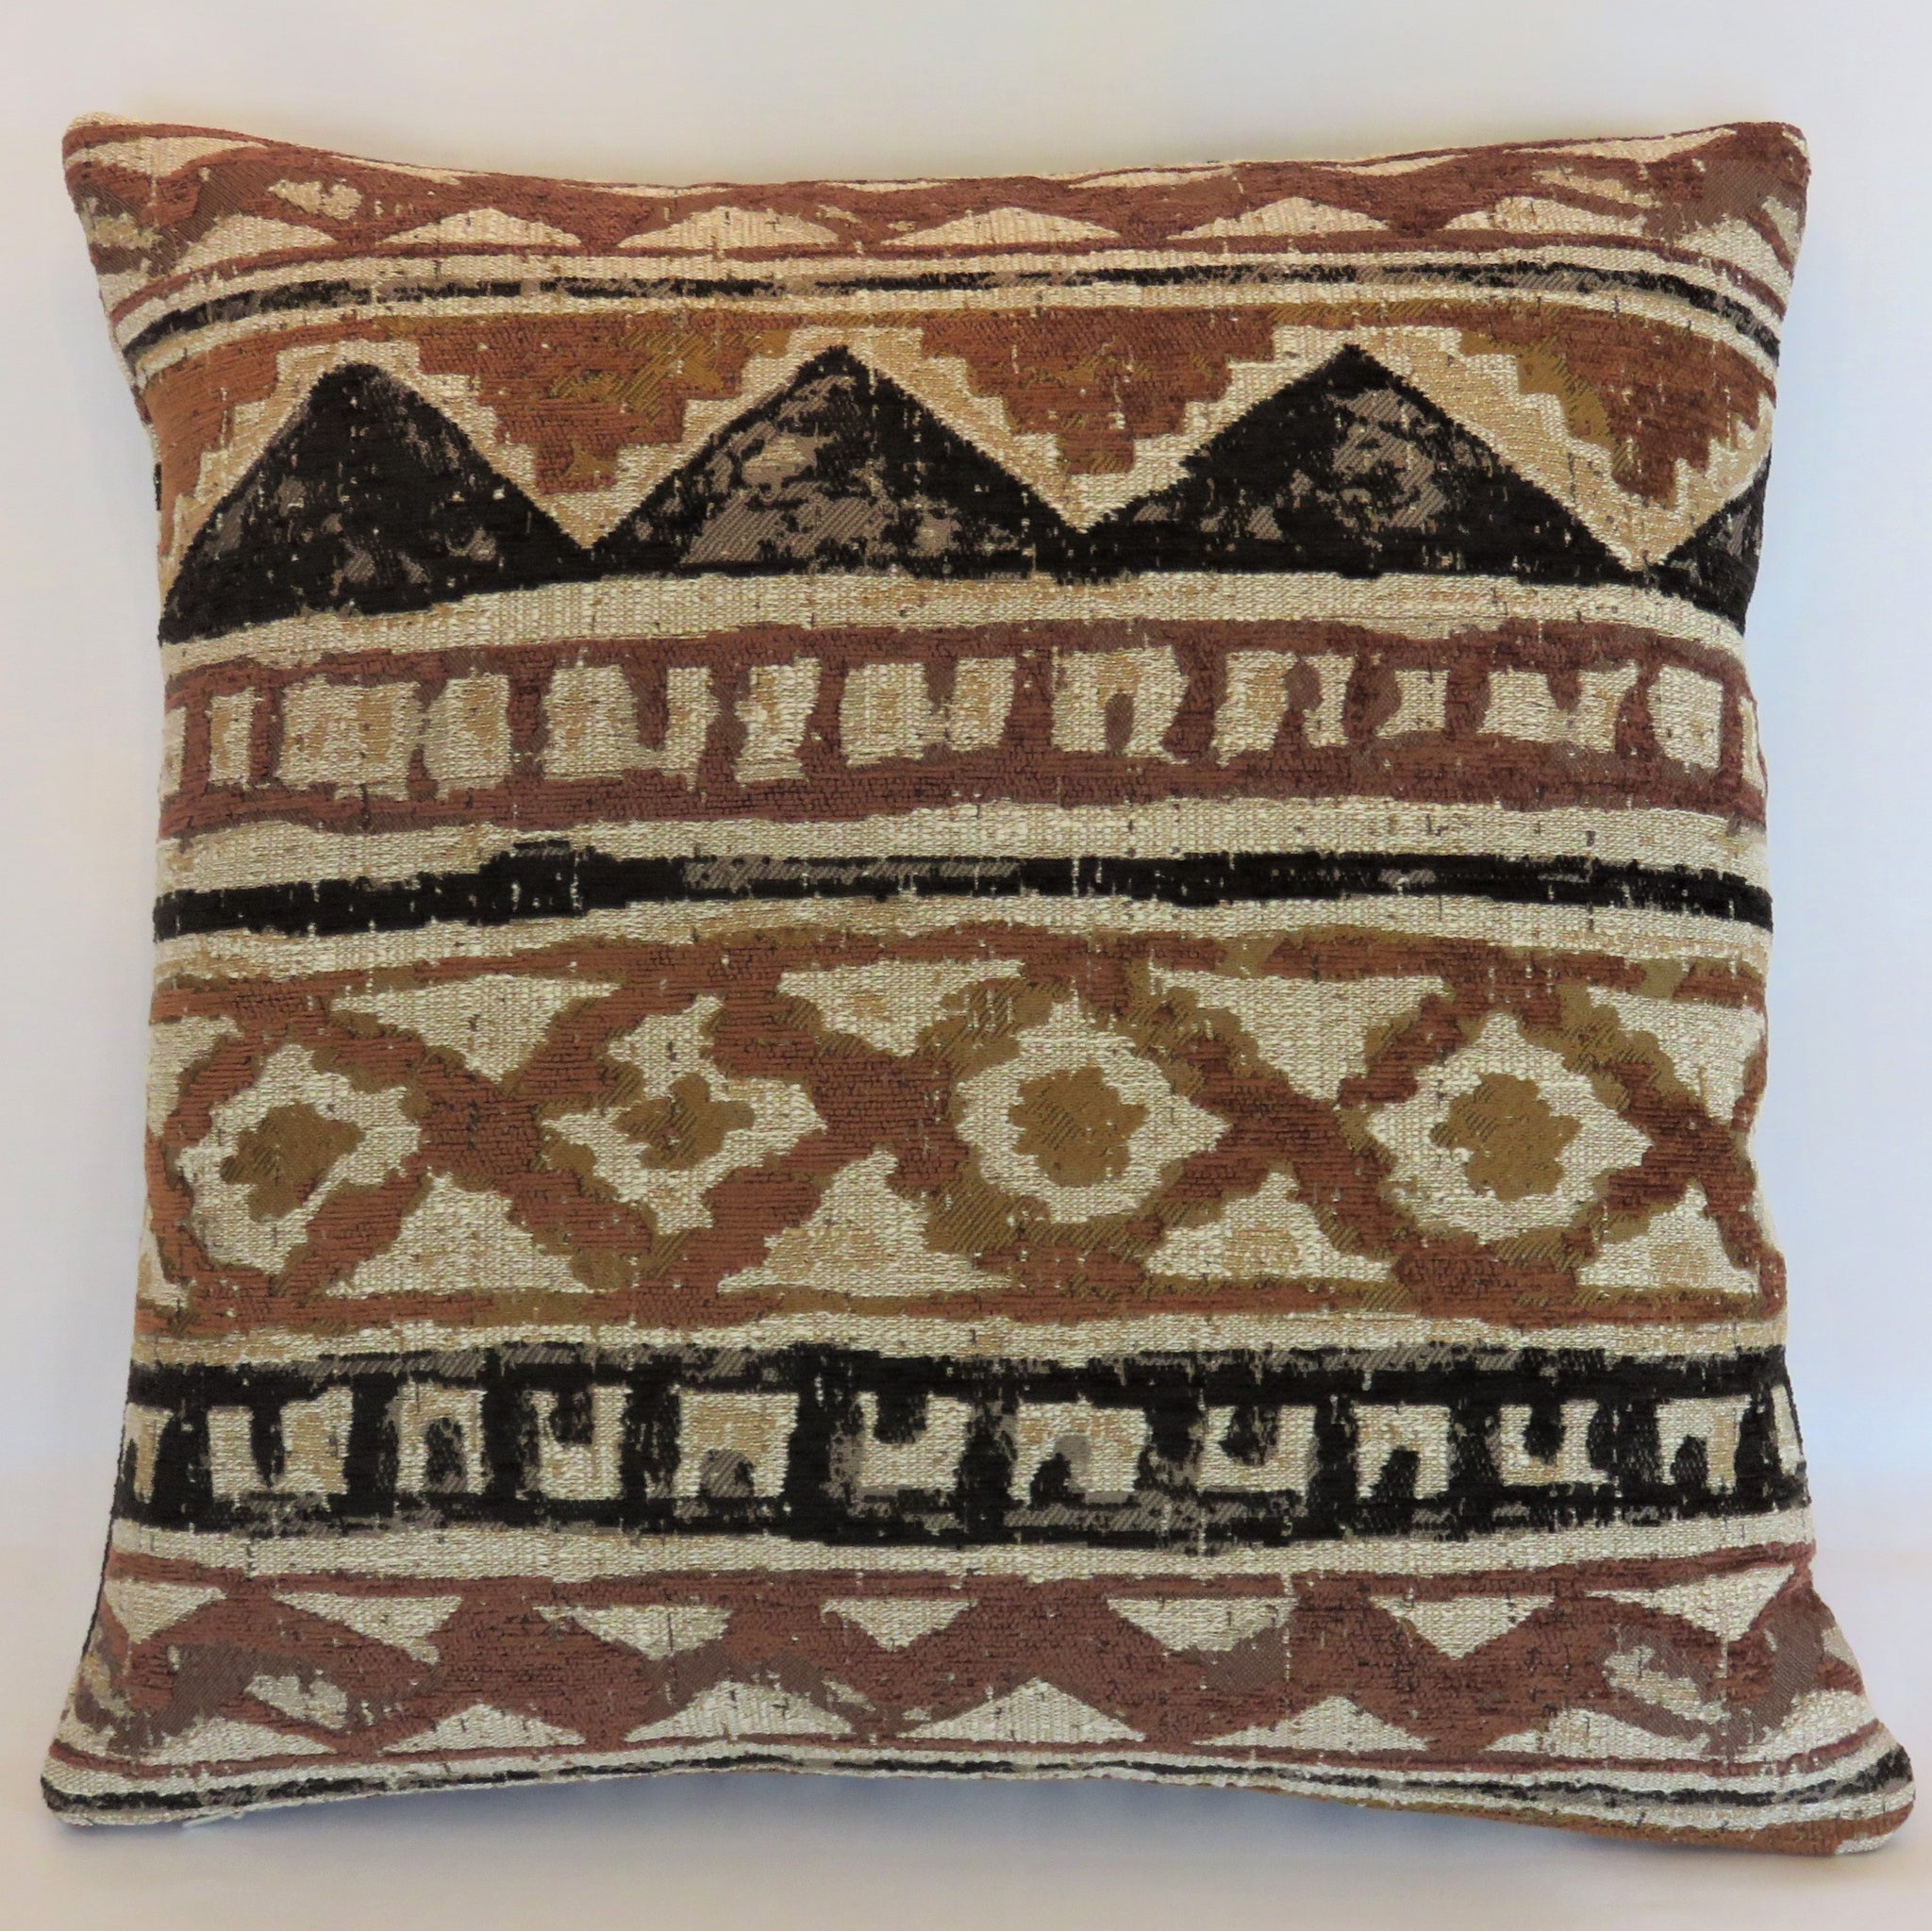 Tribal Mud Cloth Motif Pillow Cover in Brown, Black & Beige